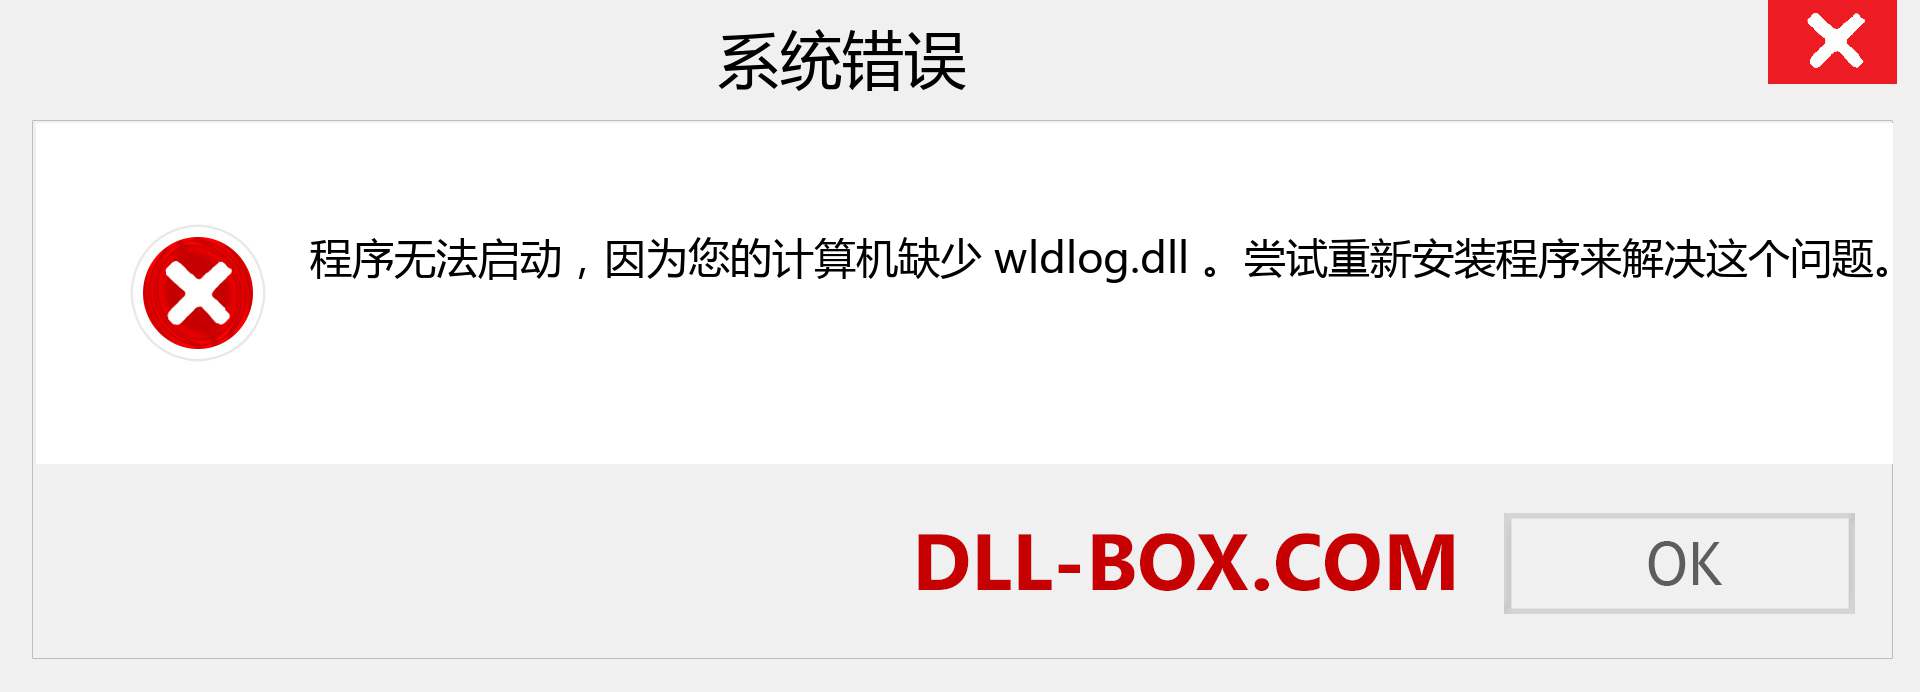 wldlog.dll 文件丢失？。 适用于 Windows 7、8、10 的下载 - 修复 Windows、照片、图像上的 wldlog dll 丢失错误